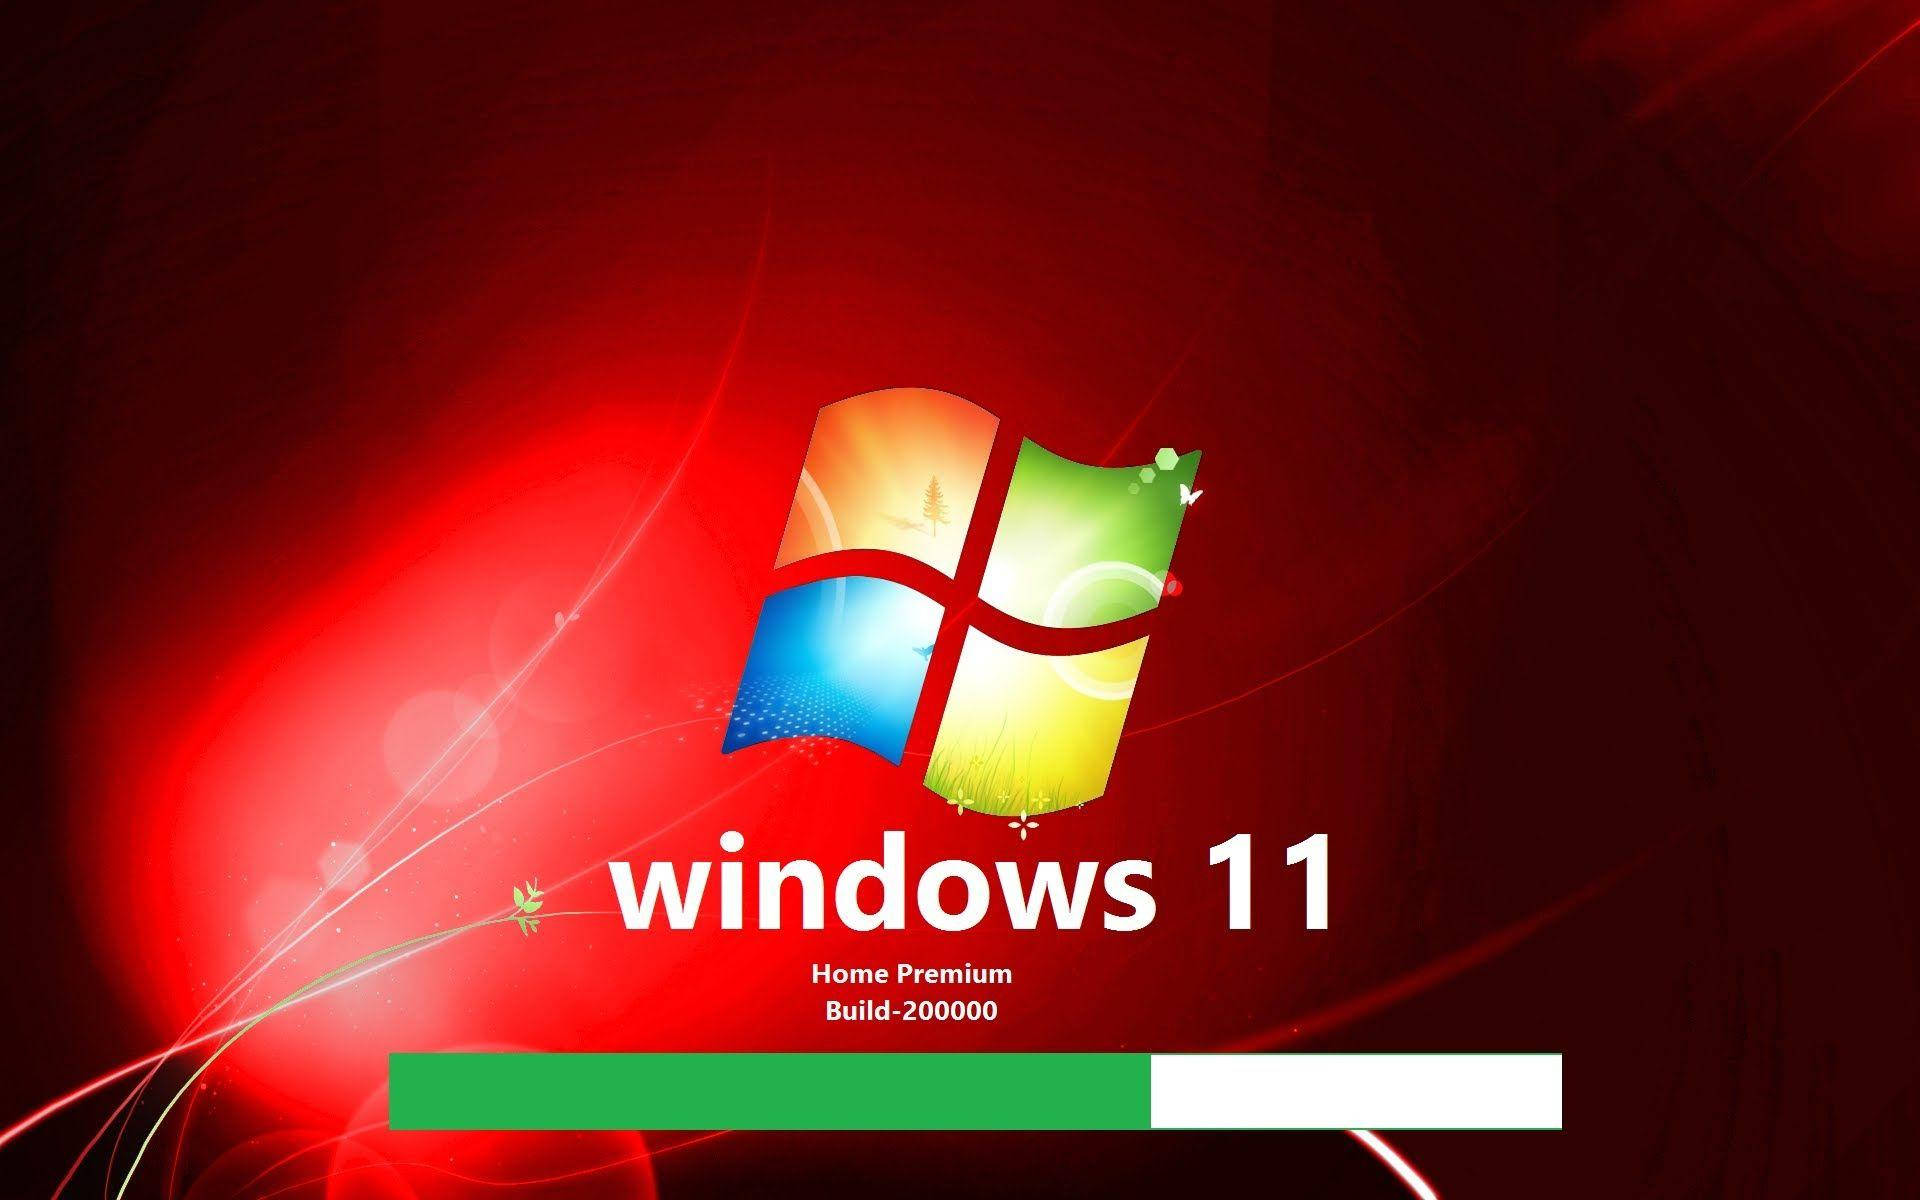 Download Windows 11 Home Premium Wallpaper 